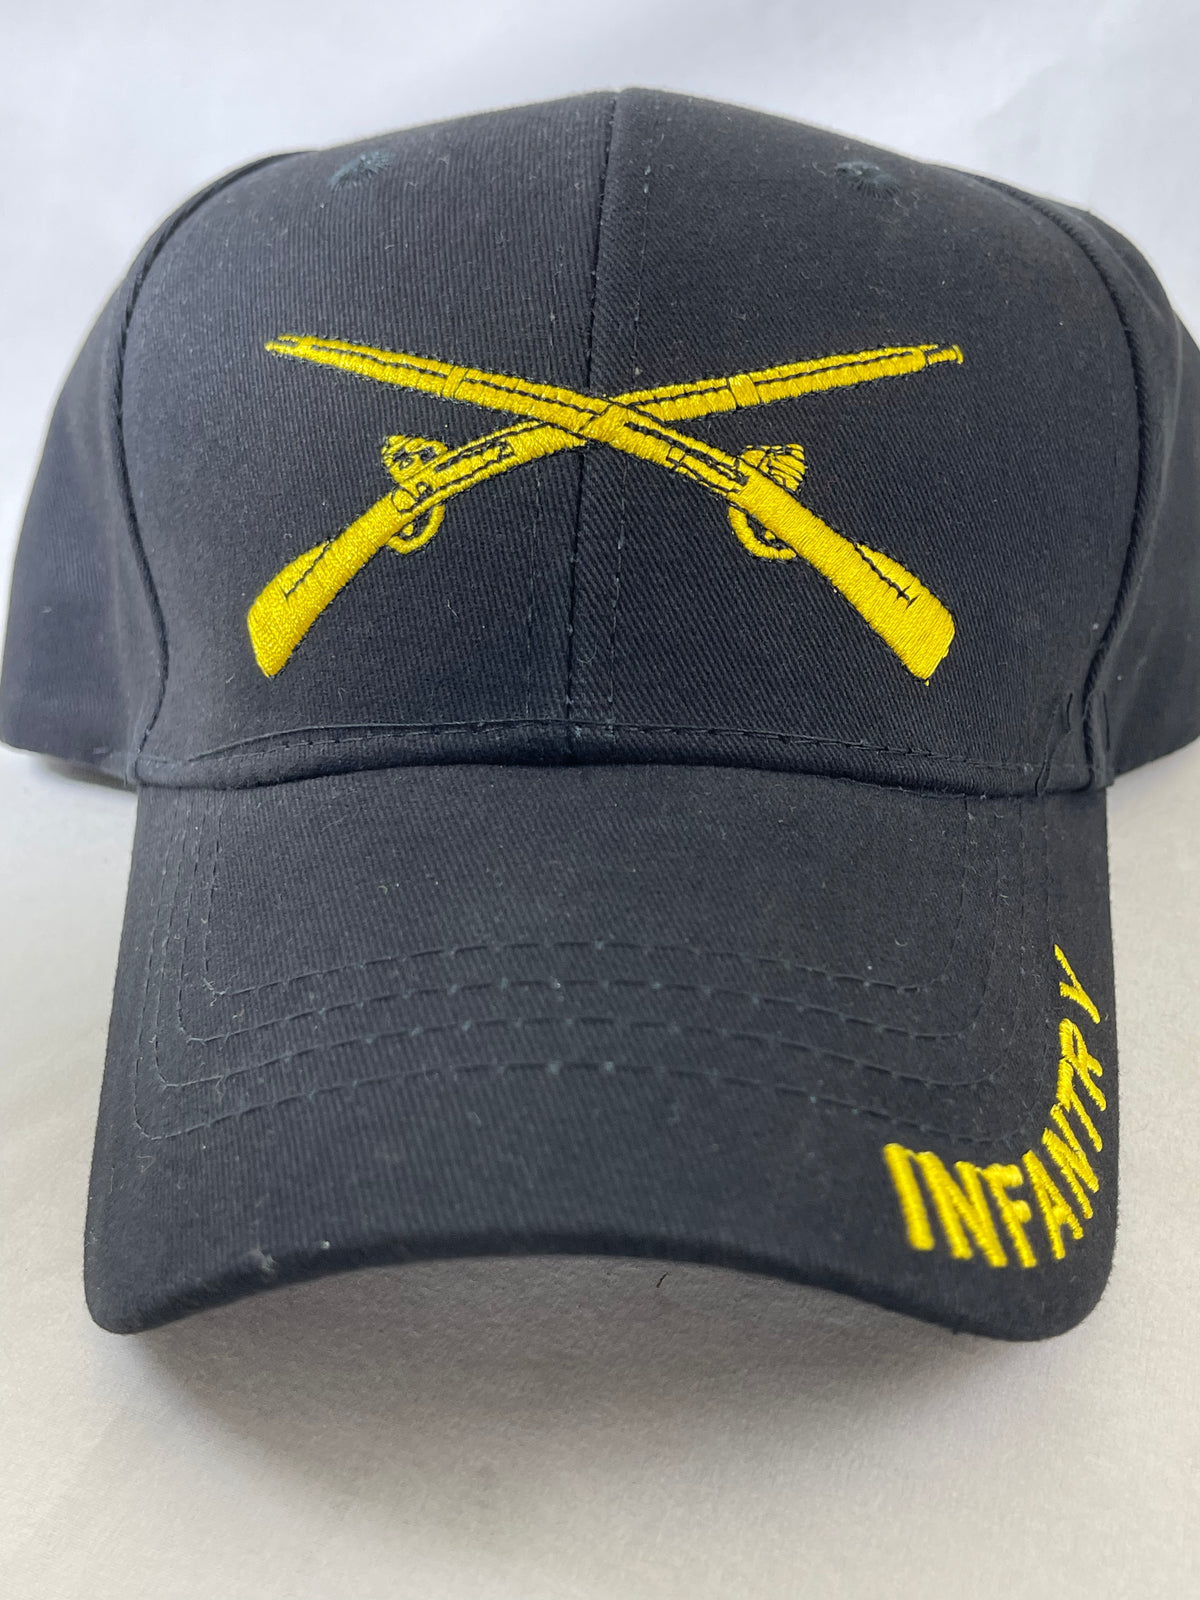 Army Infantry Cap